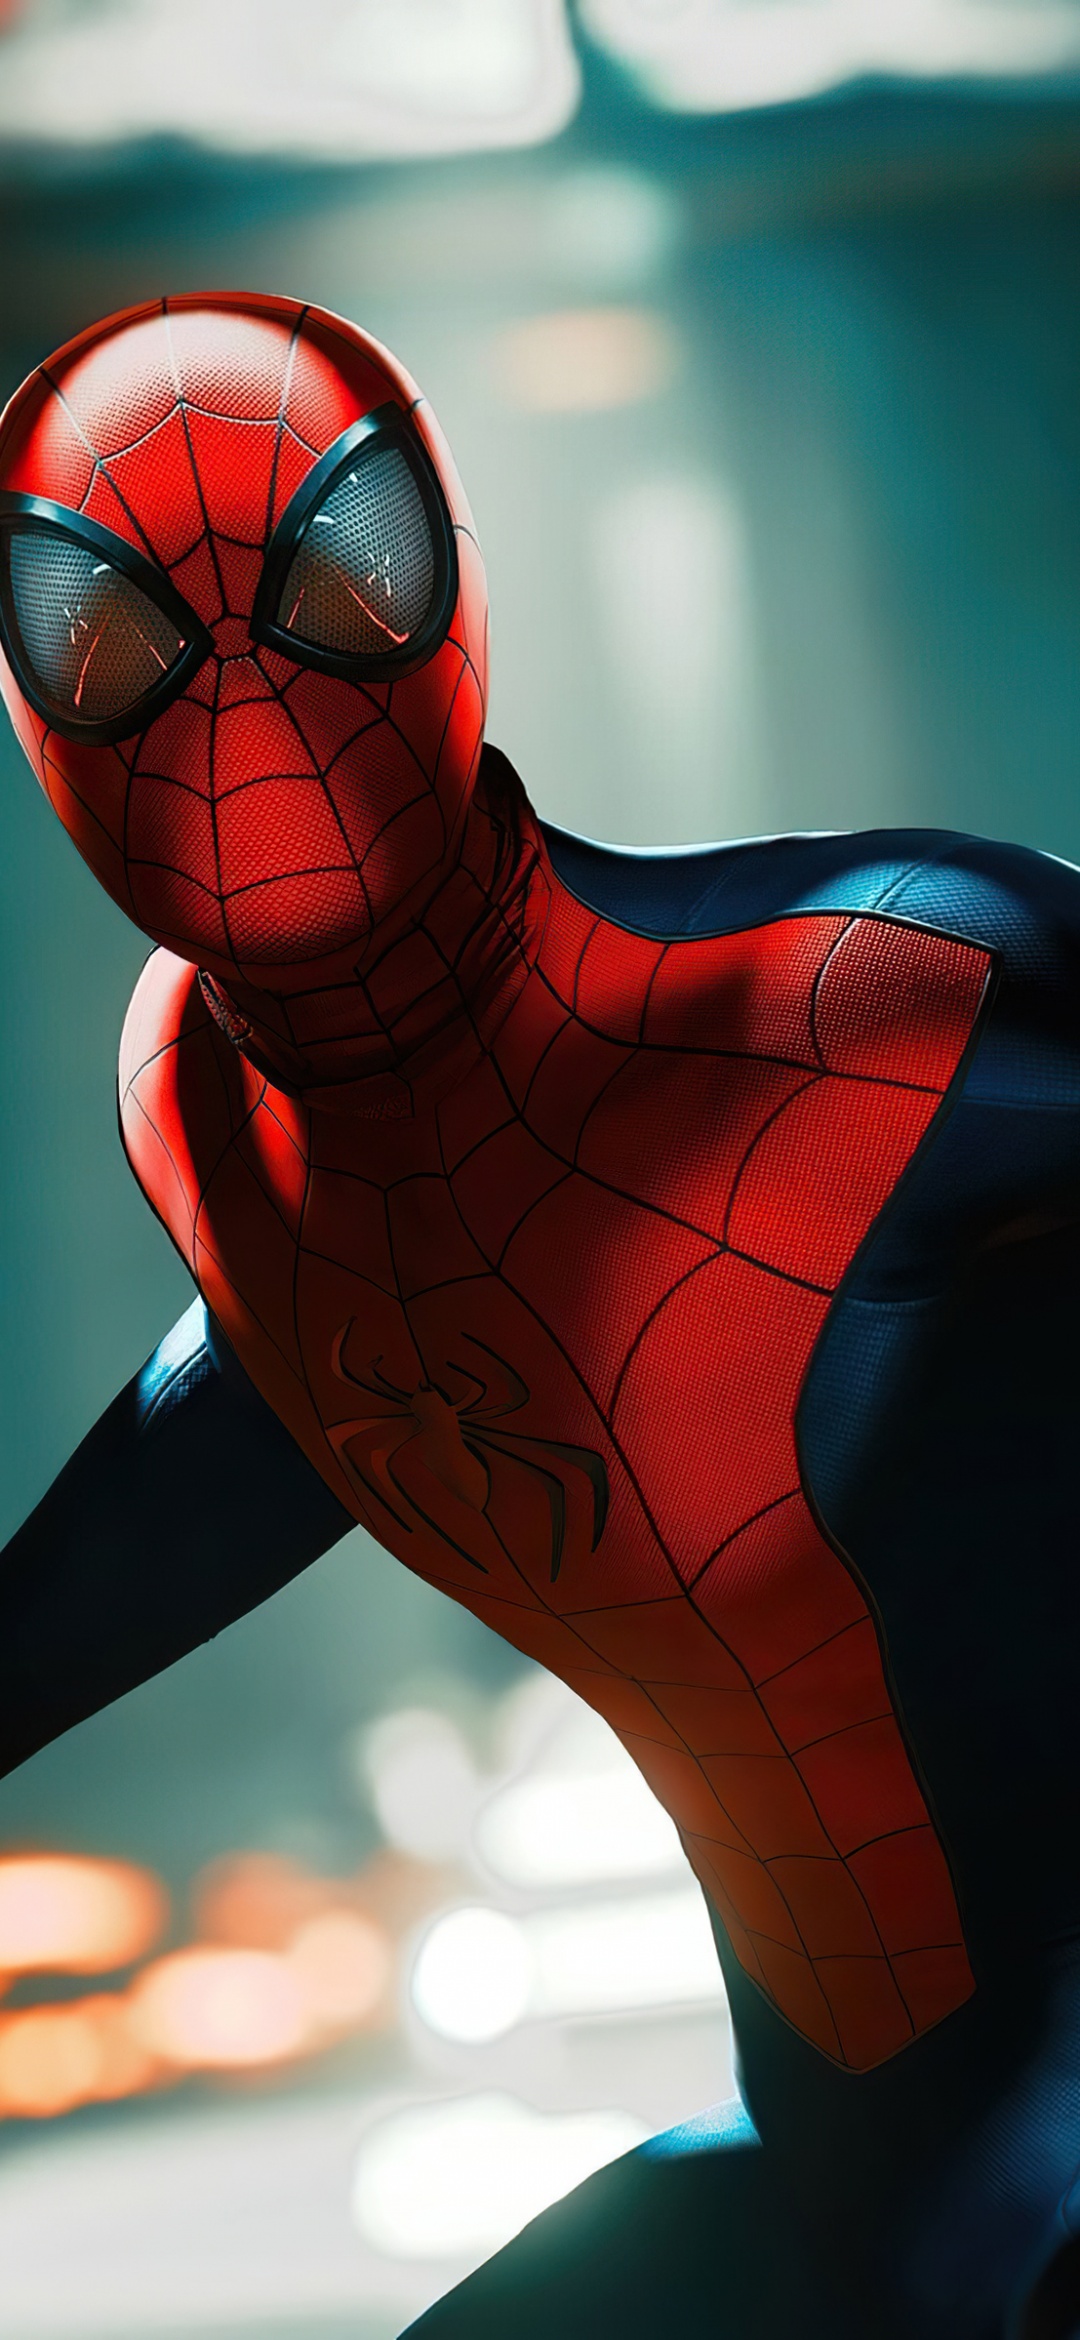 Spider Man Wallpaper 4K, Marvel Superheroes, Fan Art, Graphics CGI